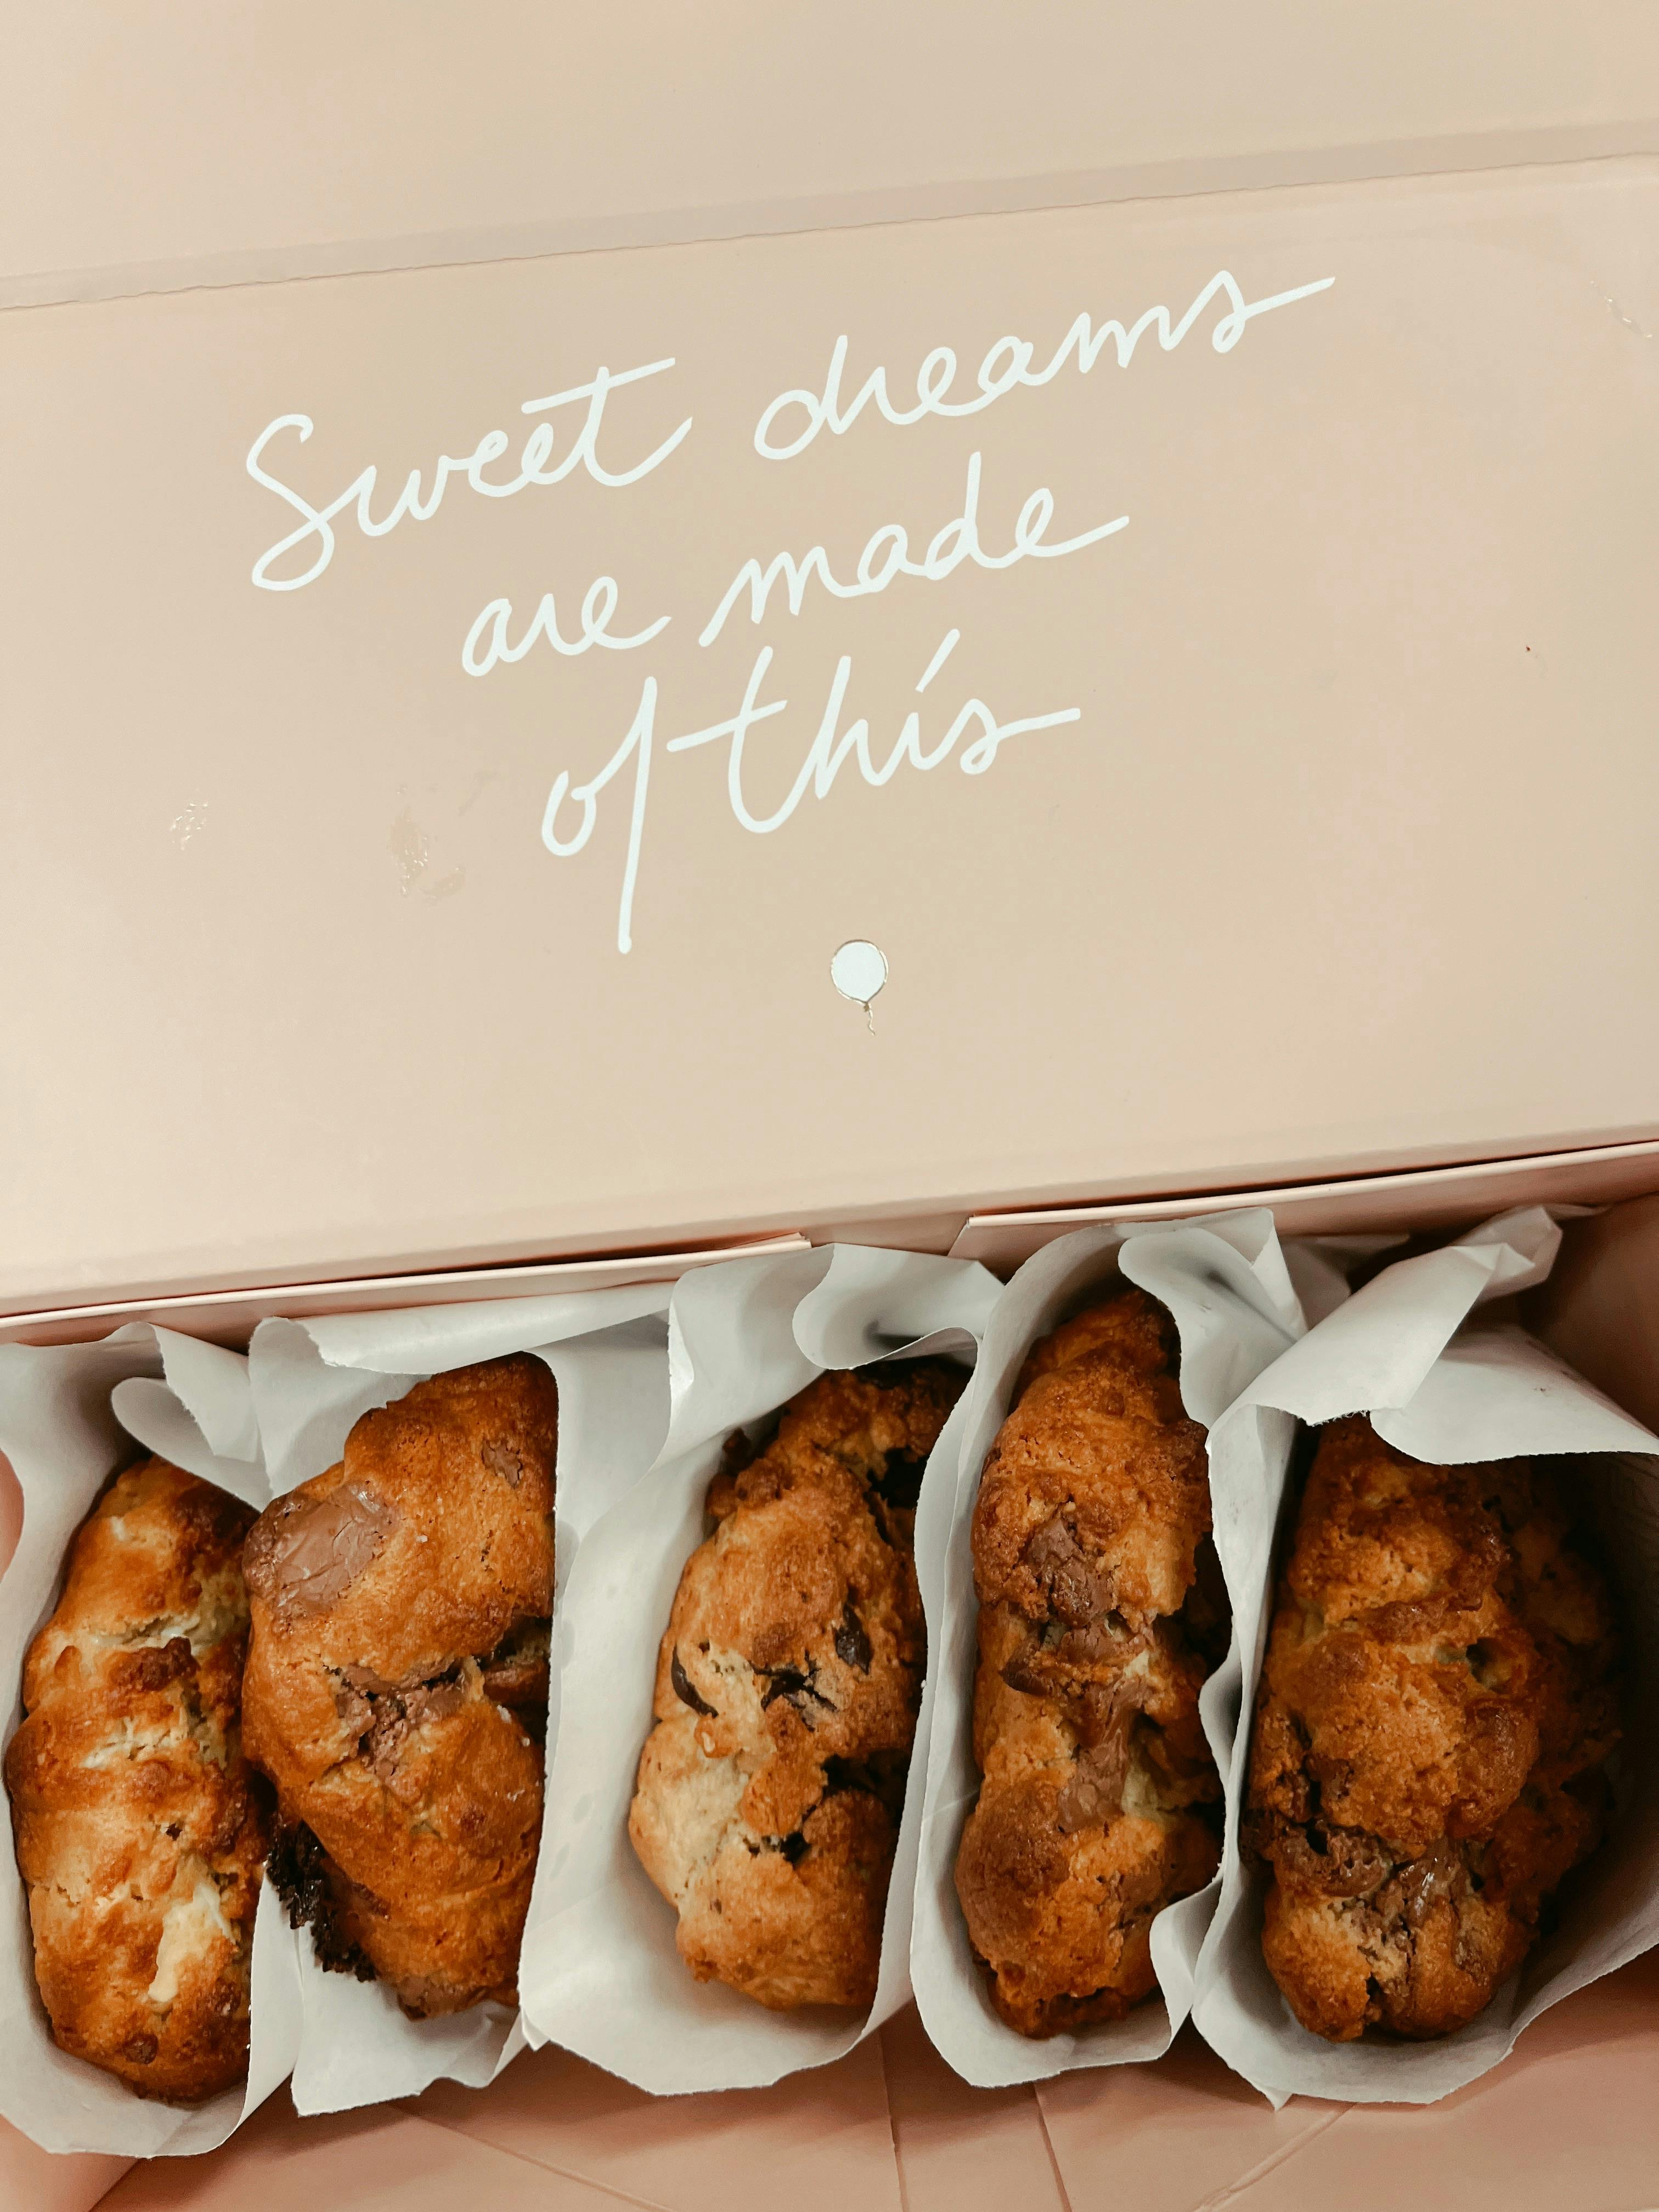 Cookies inside a box | Source: Pexels